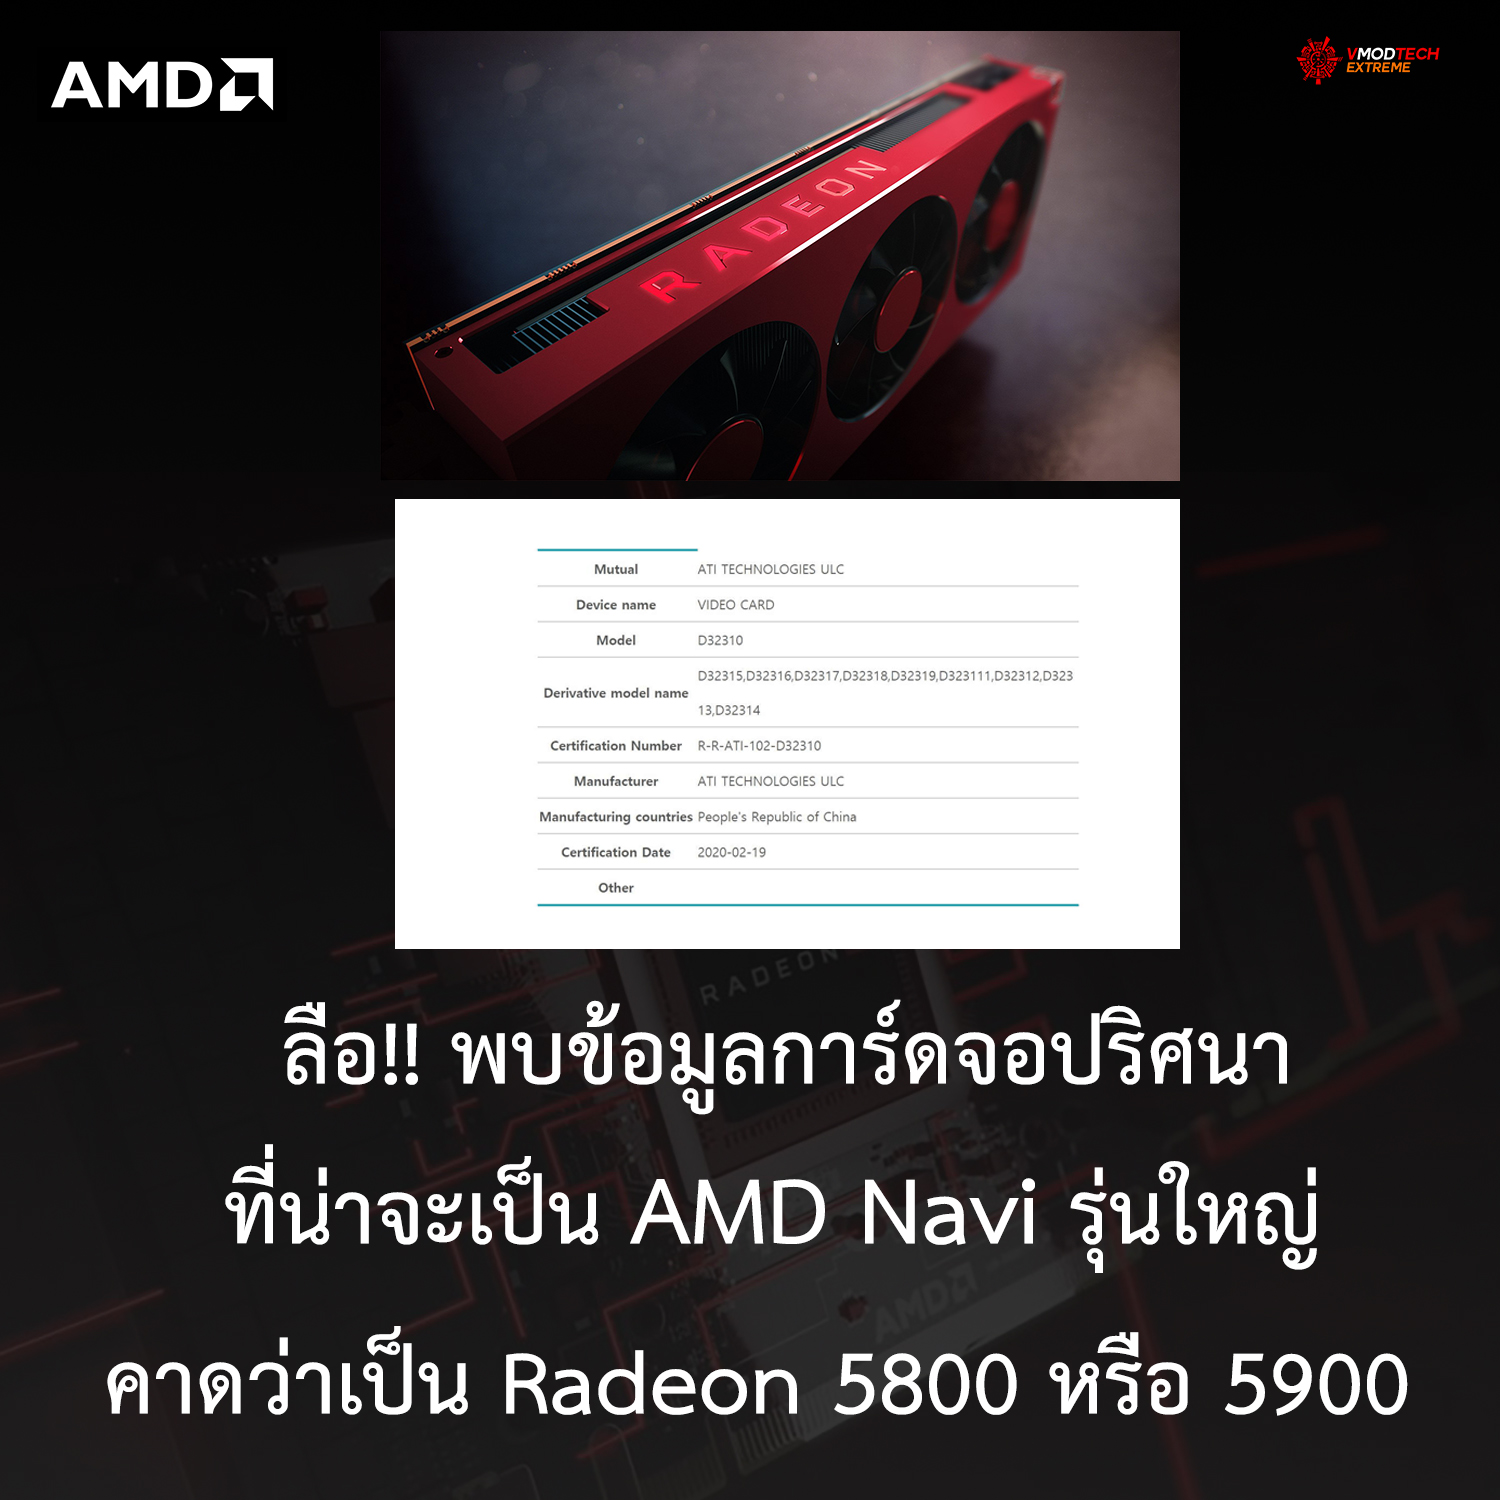 big navi 5800 5900 ลือ!! พบข้อมูลการ์ดจอปริศนาที่น่าจะเป็น AMD Navi รุ่นใหญ่คาดว่าเป็น Radeon 5800 หรือ 5900 